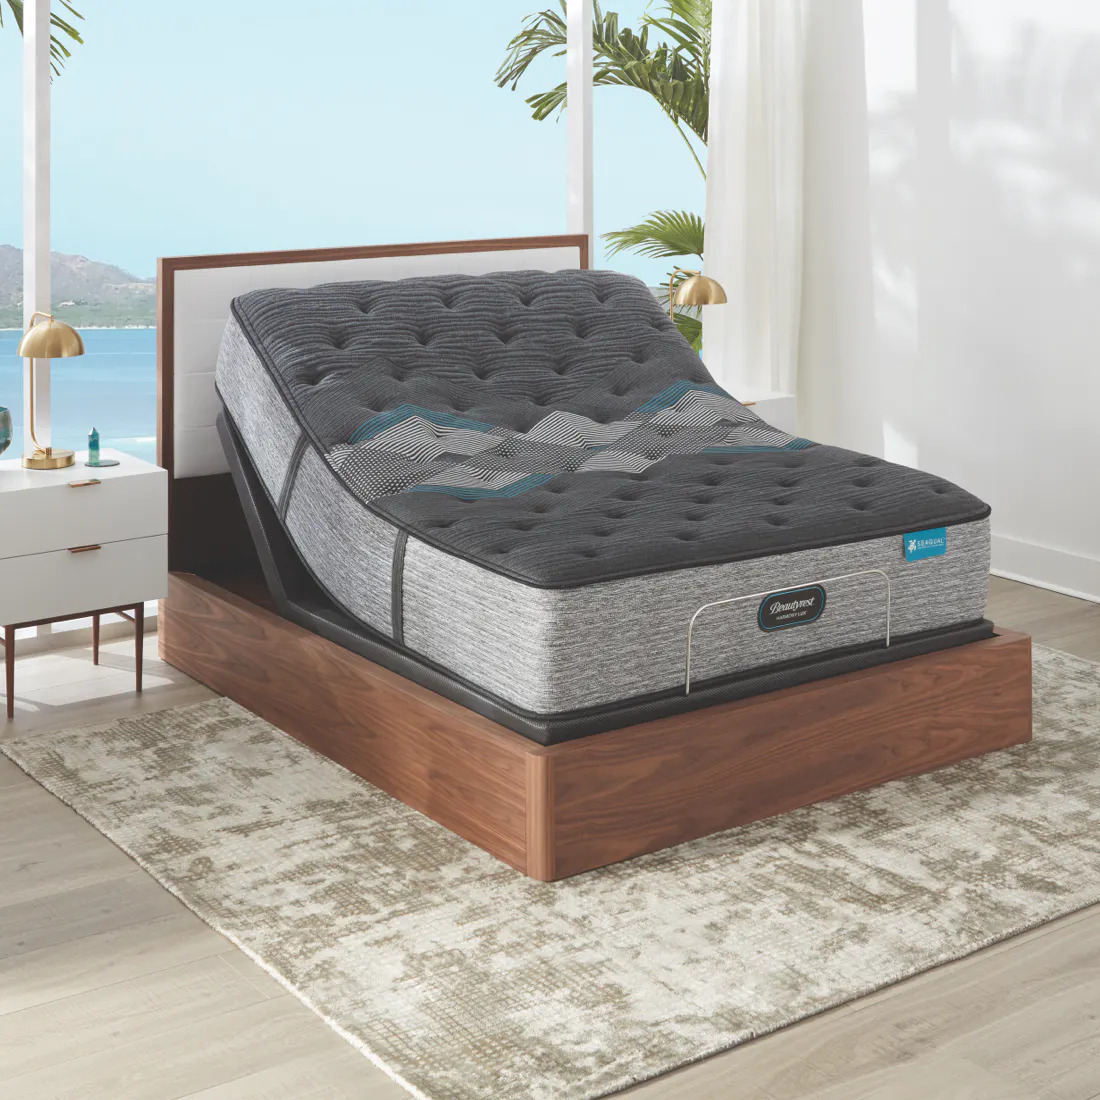 BeautyRest mattress on brand adjustable bedframe